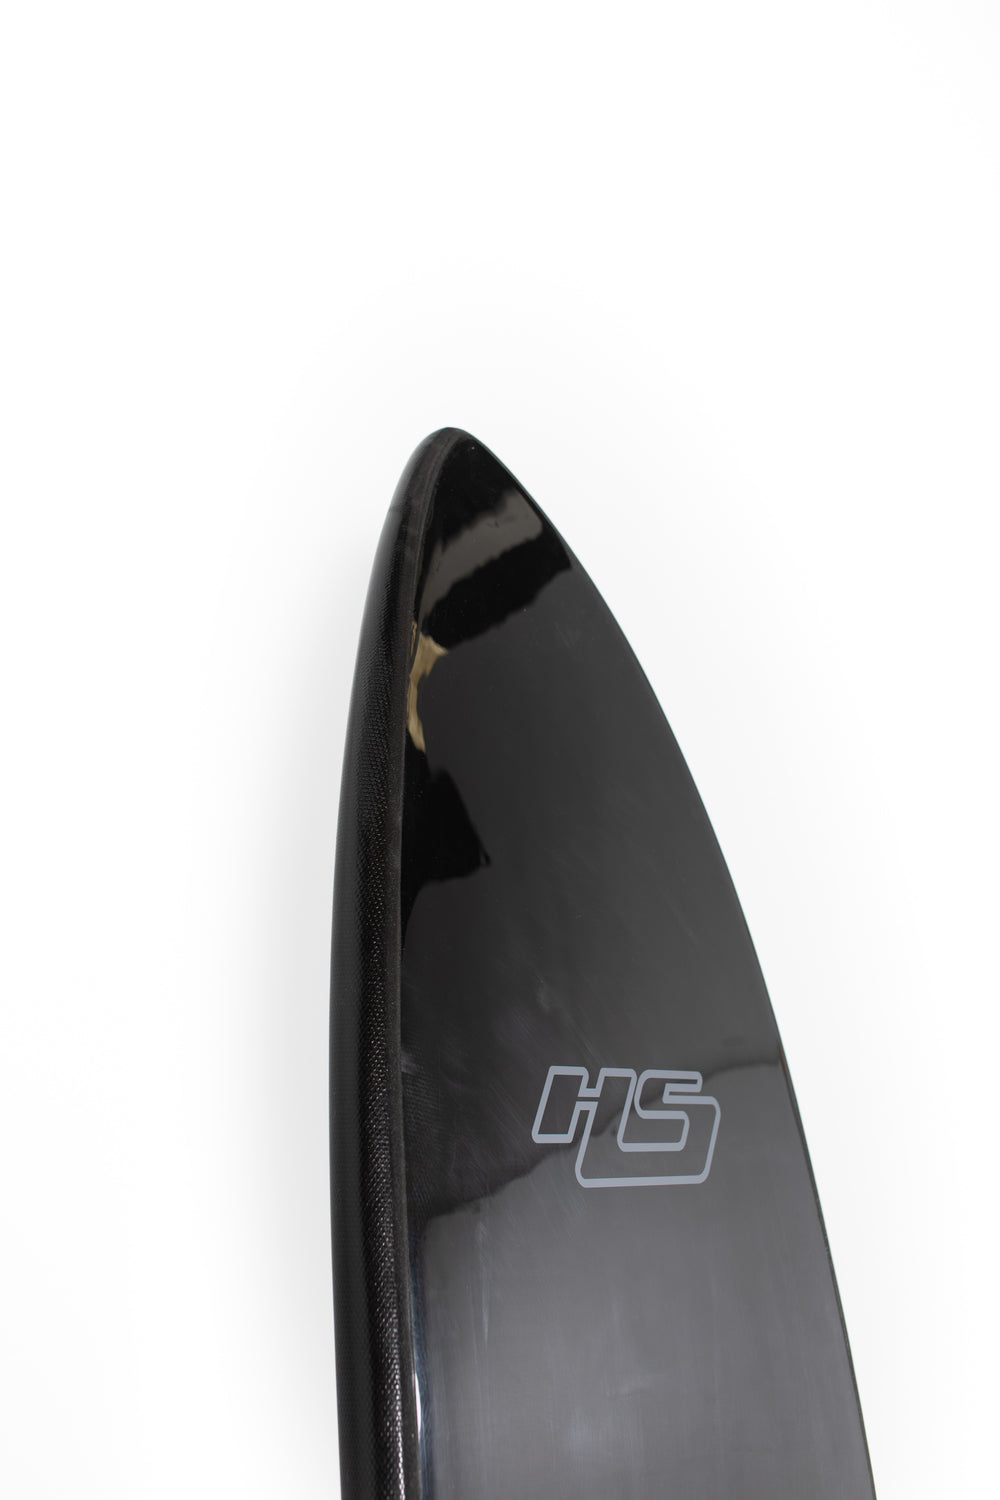 HaydenShapes Surfboard - LOOT SOFT - 7'0